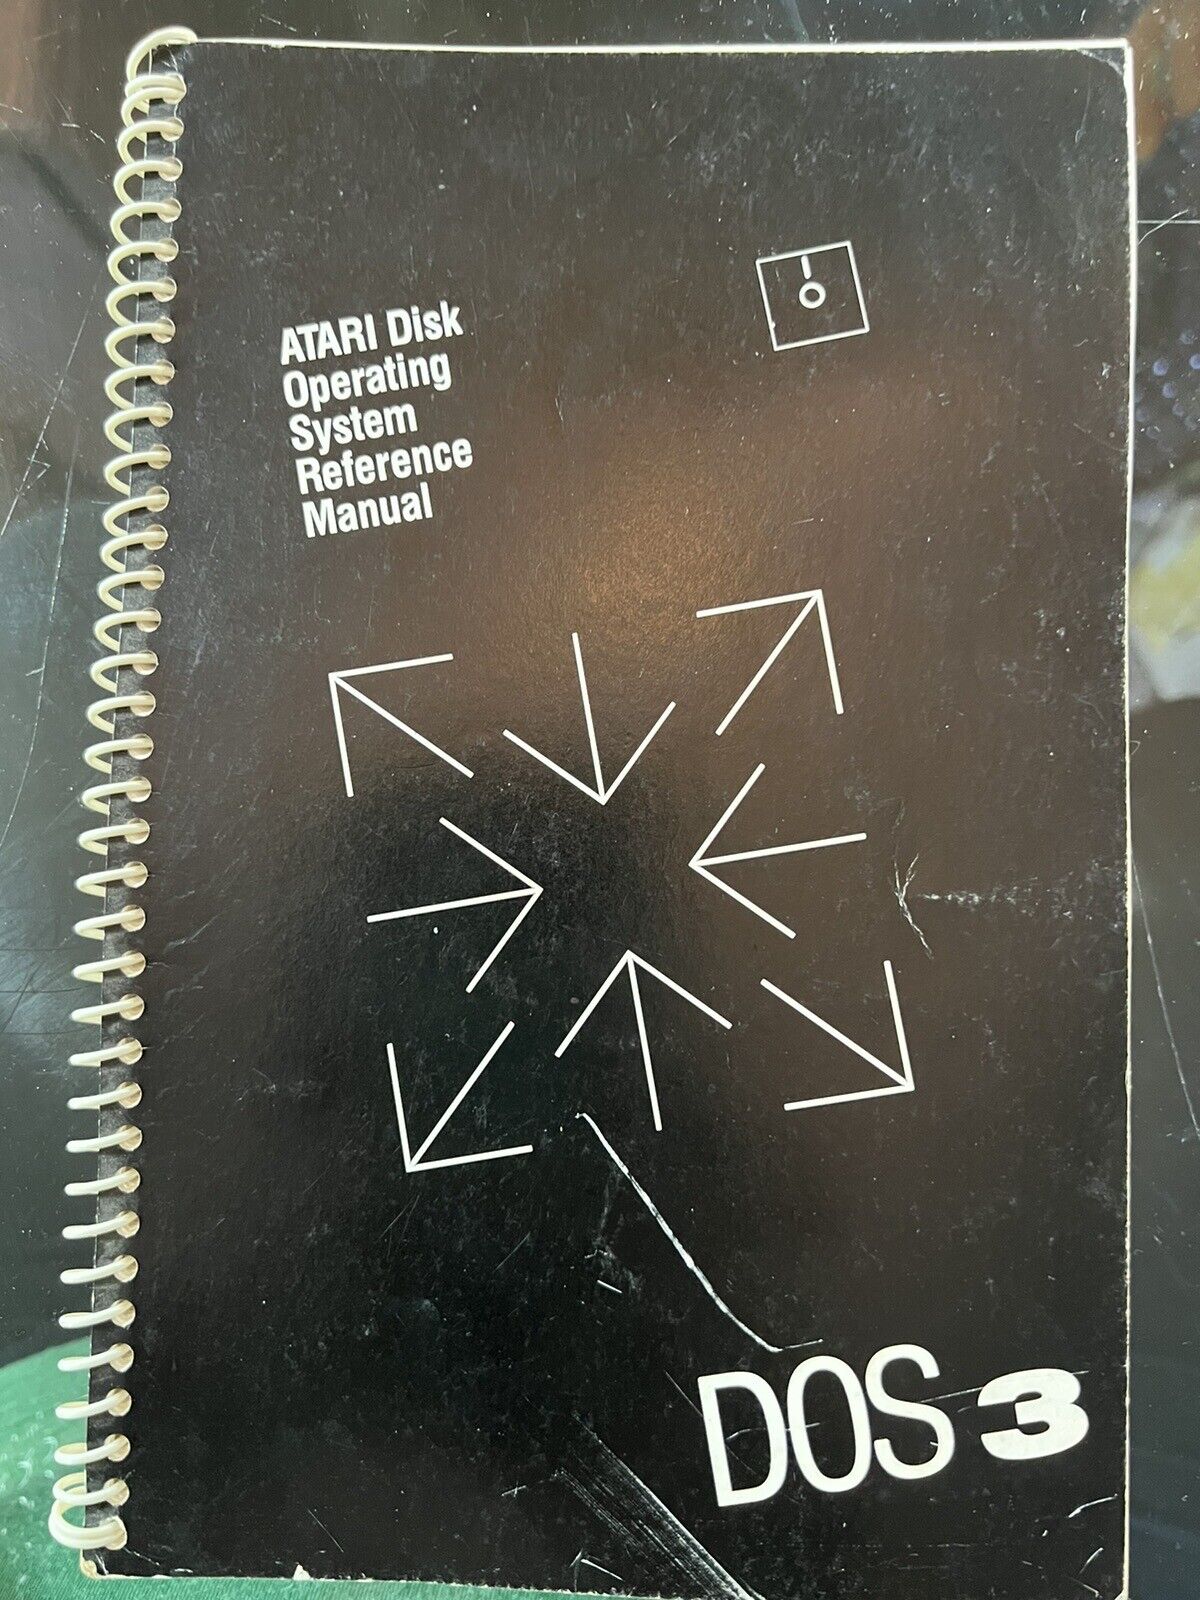 Atari Disk Operating System Reference Manual DOS 3 Vintage -1983